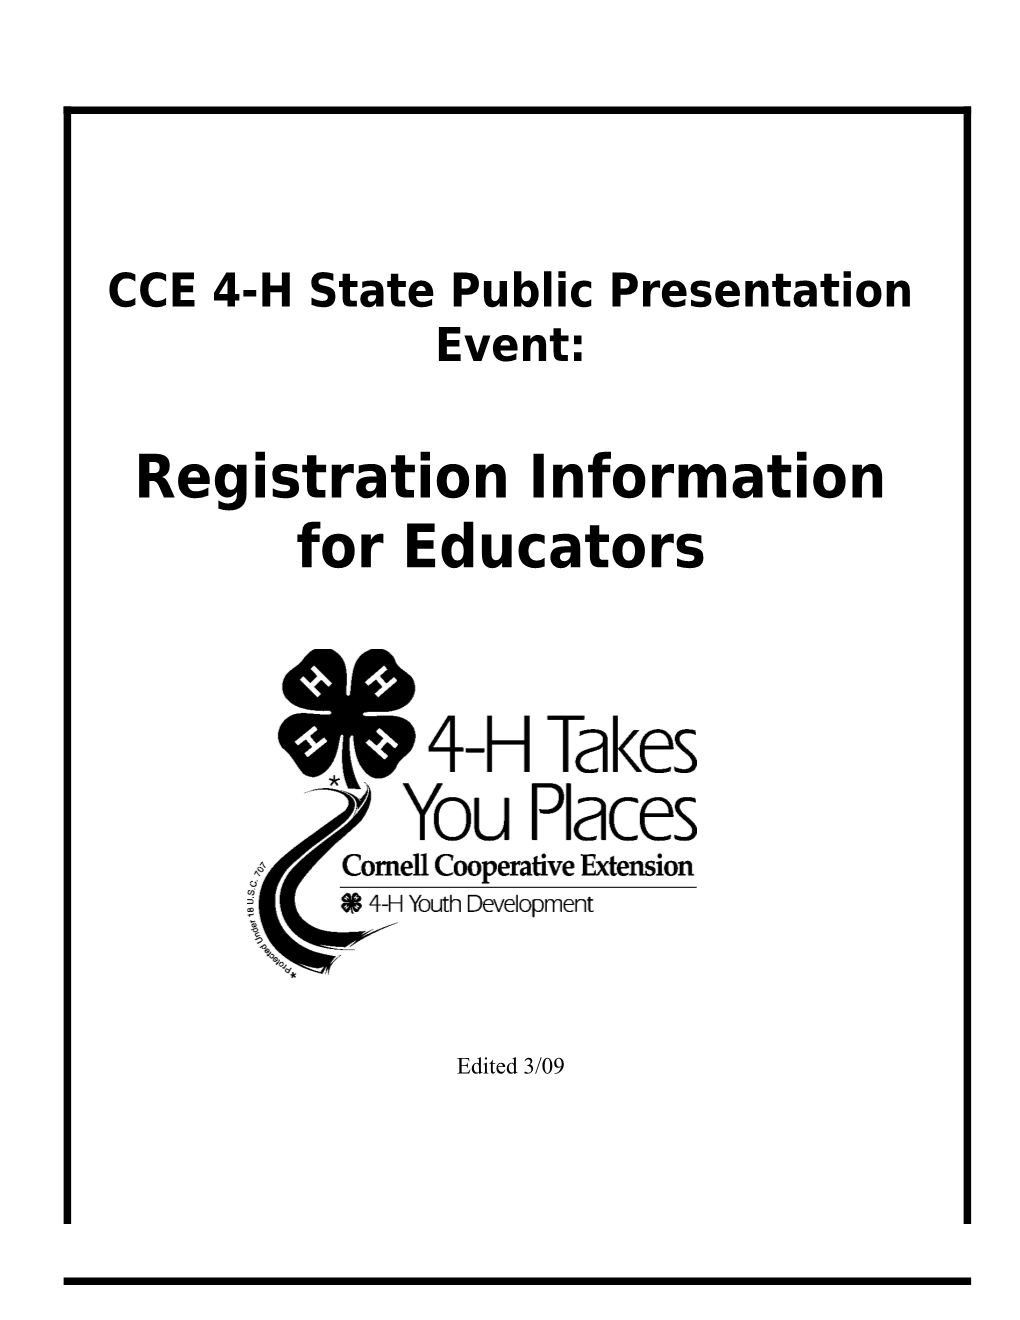 The 4-H Public Presentation Program